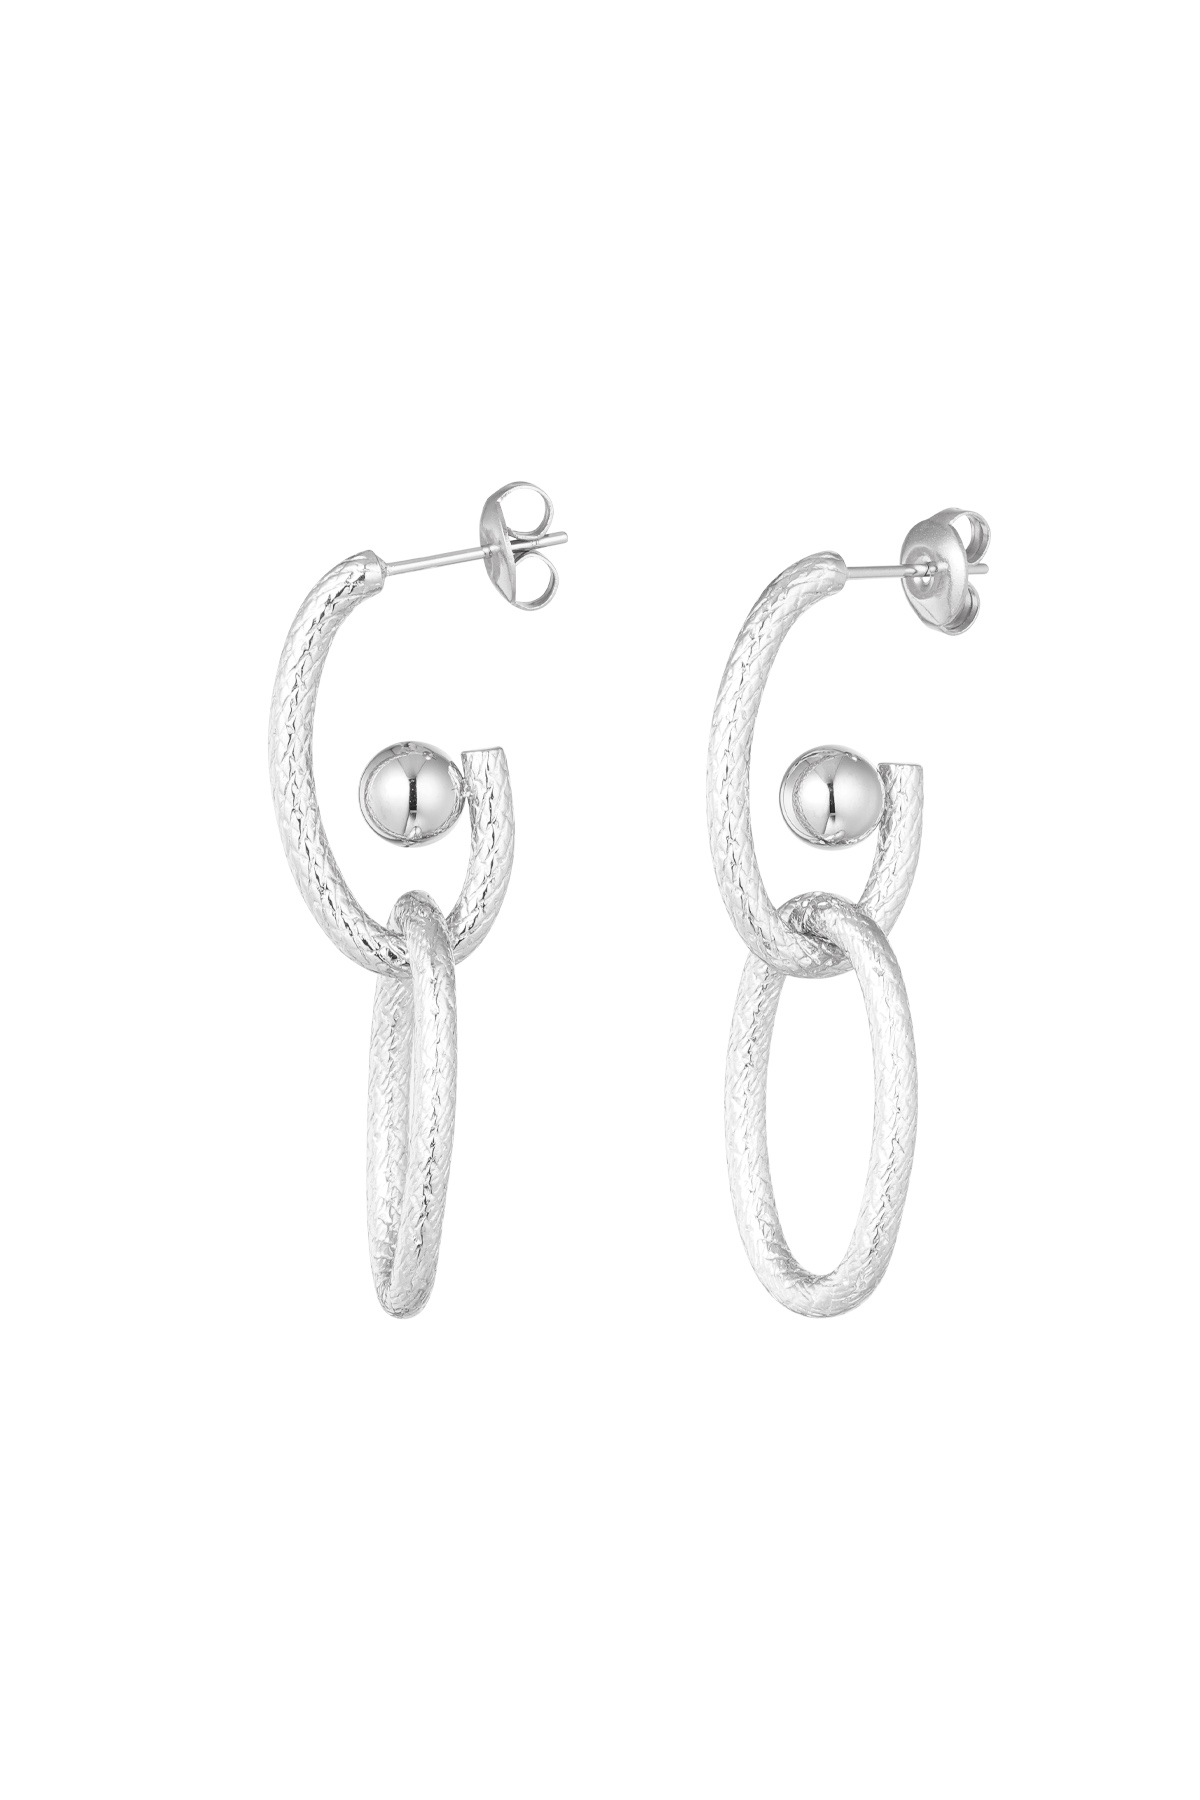 Aesthetic link earrings - silver